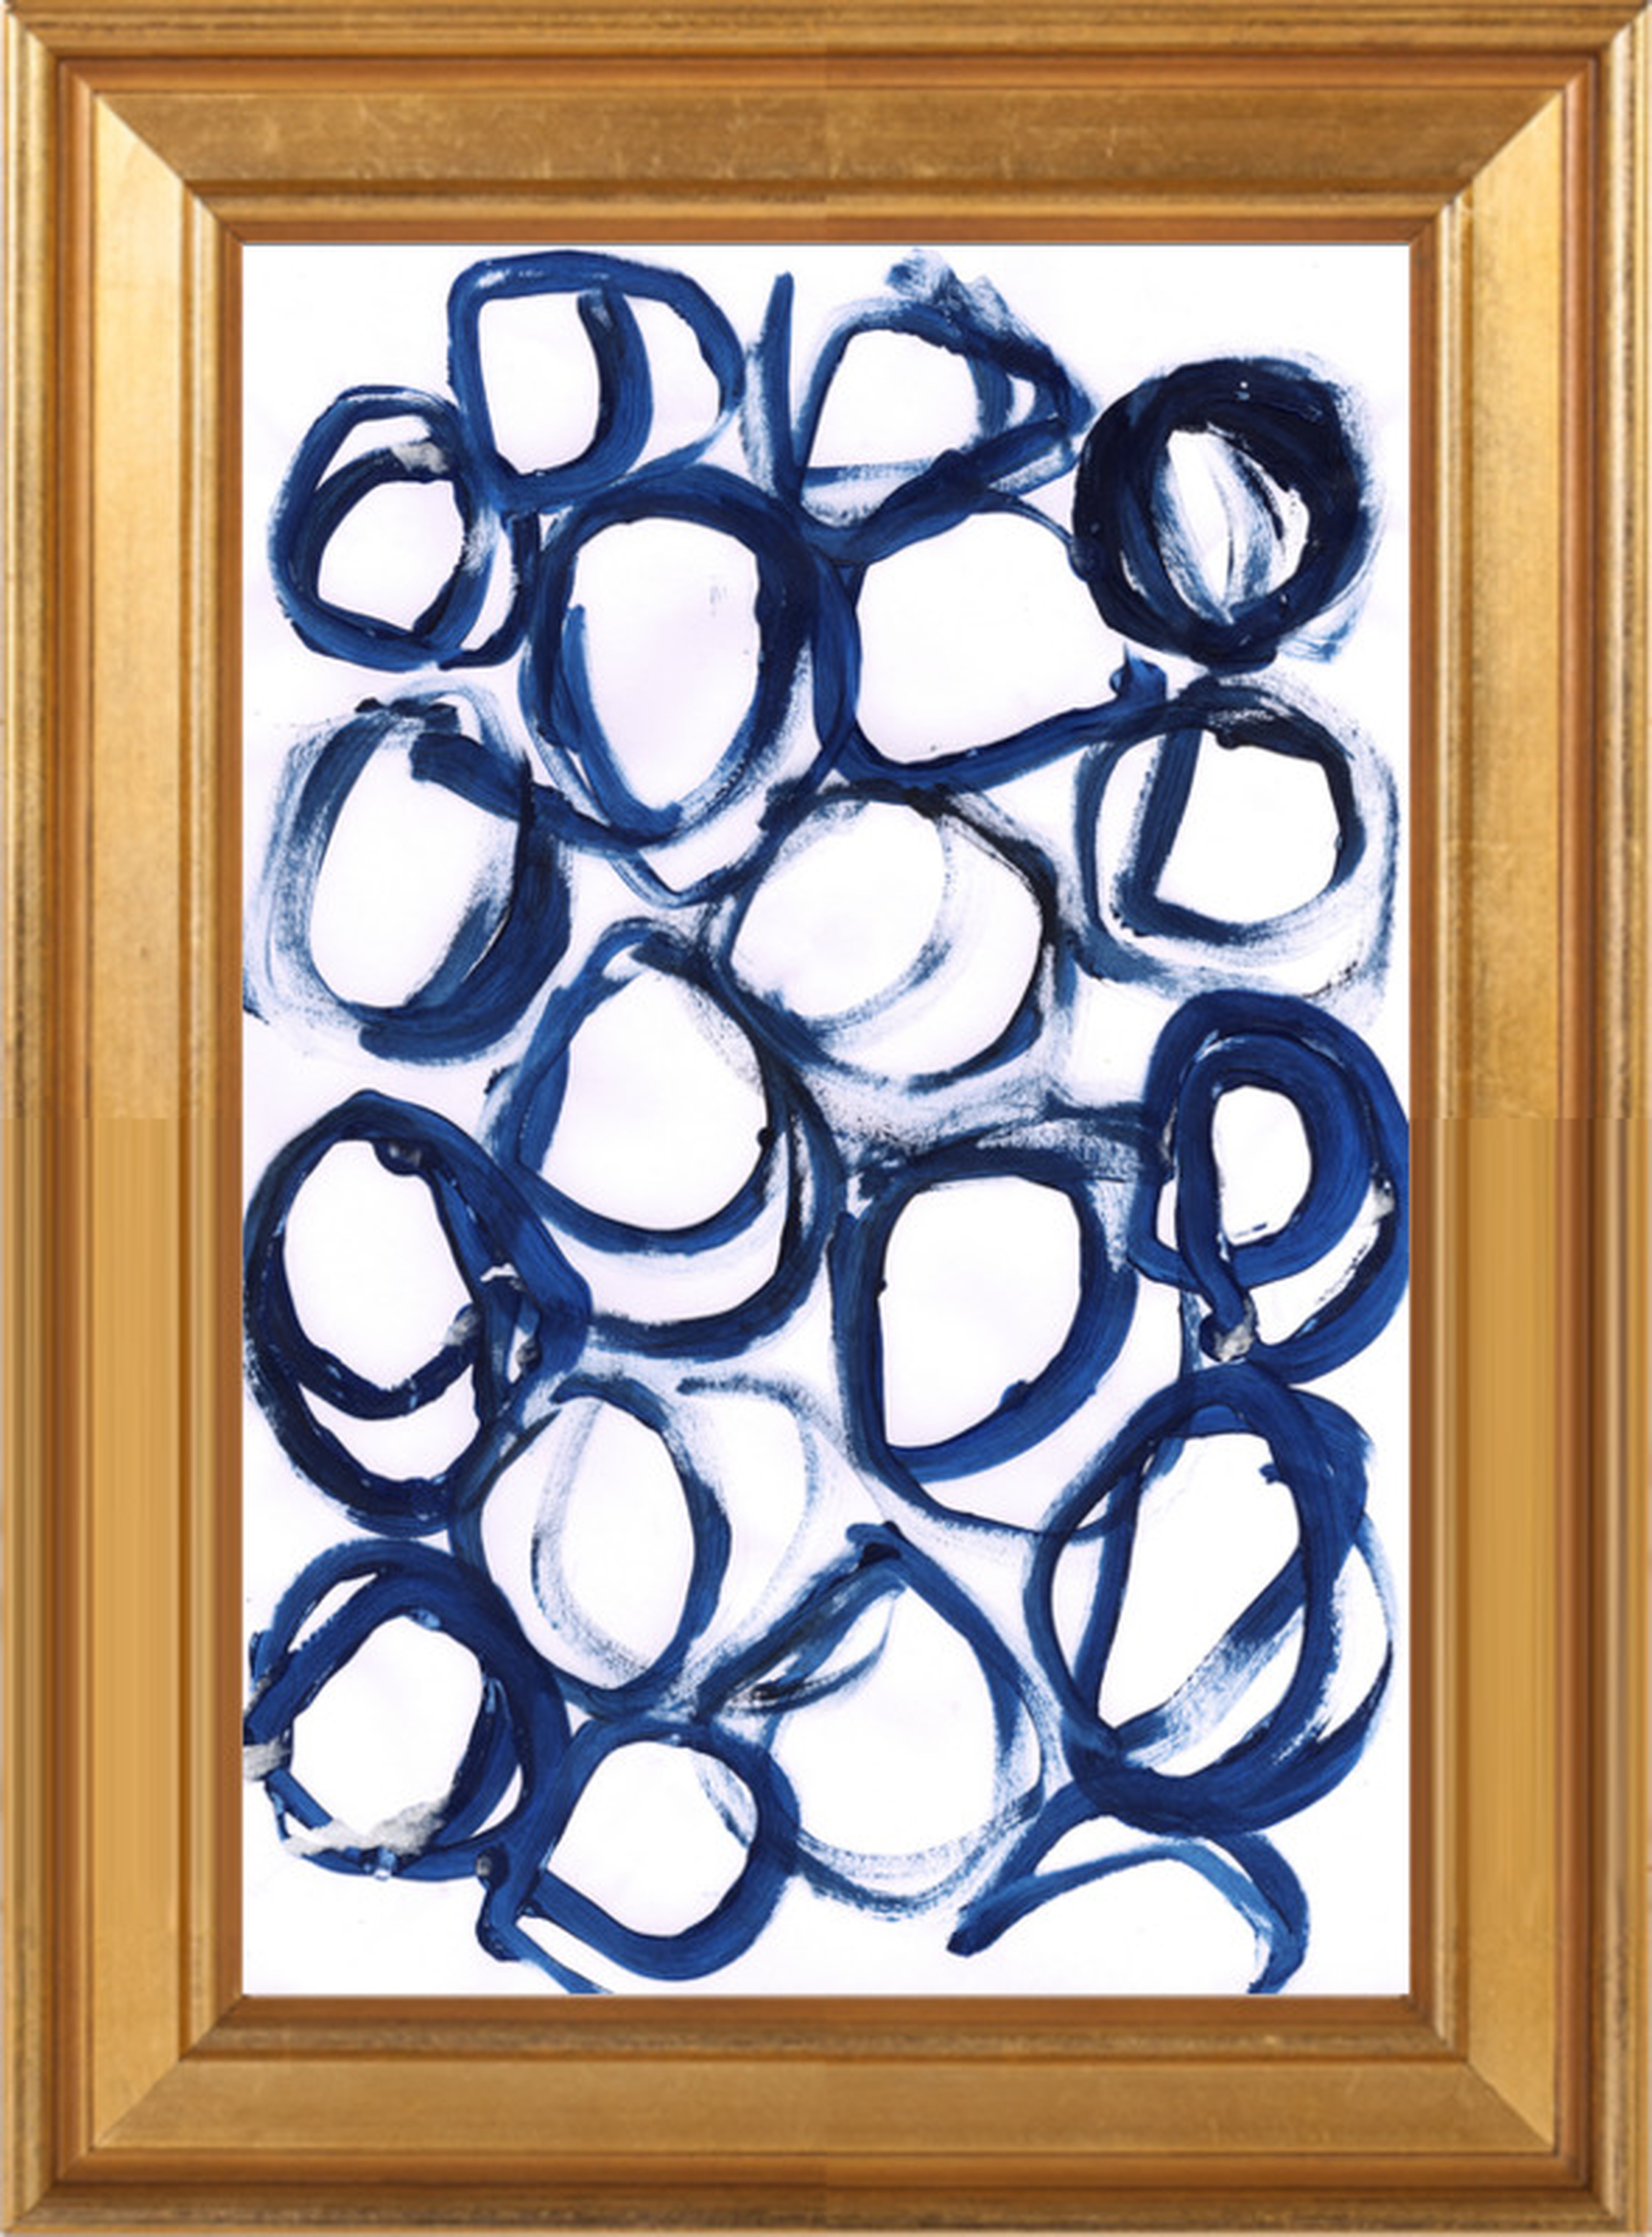 Blue Loops by morioke for Artfully Walls - Artfully Walls